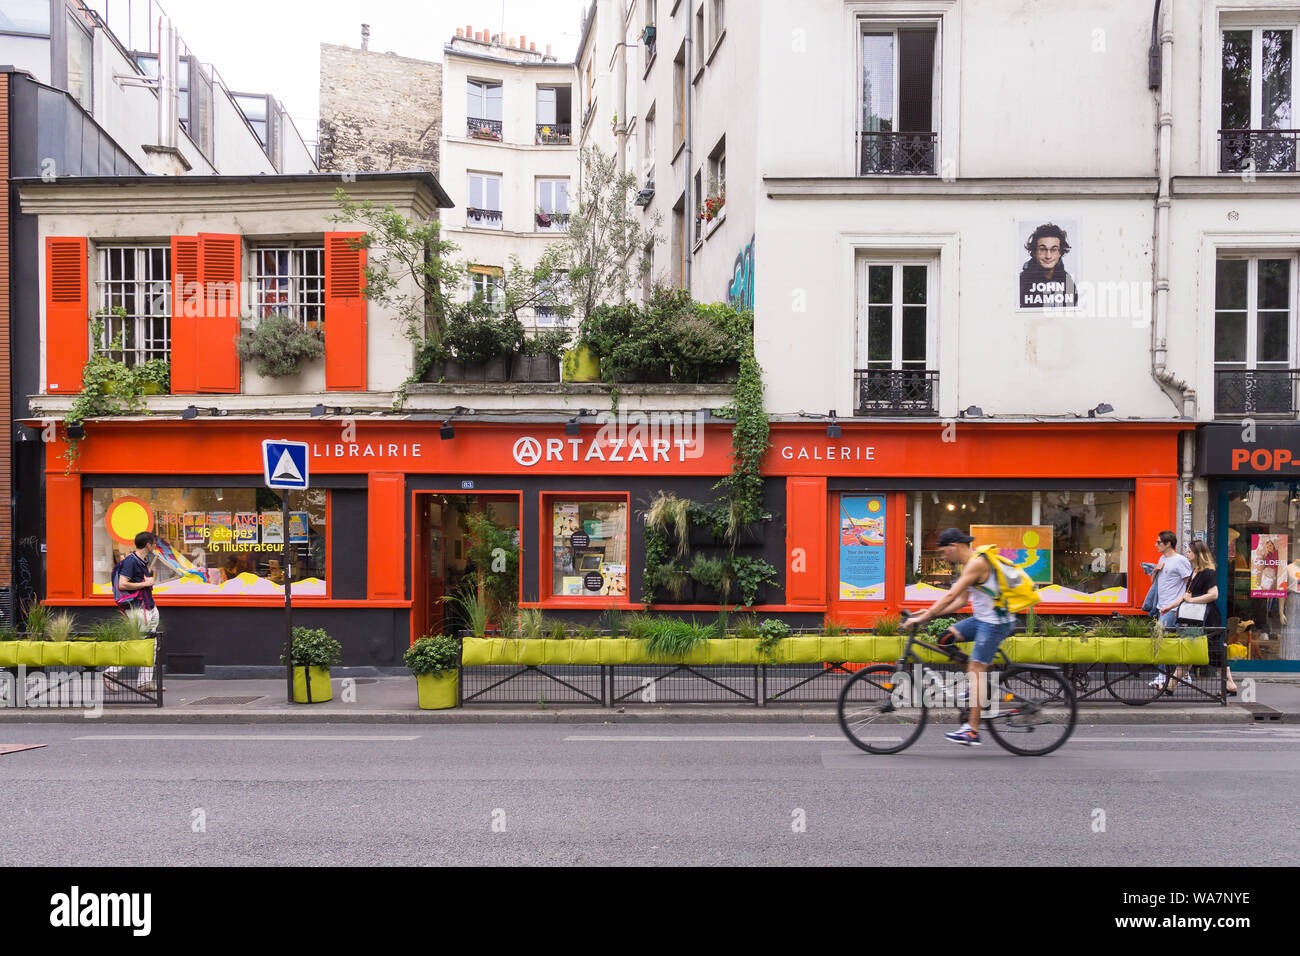 Paris Artazart - store front of a conceptual bookstore Artazart in the 10th arrondissement of Paris, France, Europe. Stock Photo